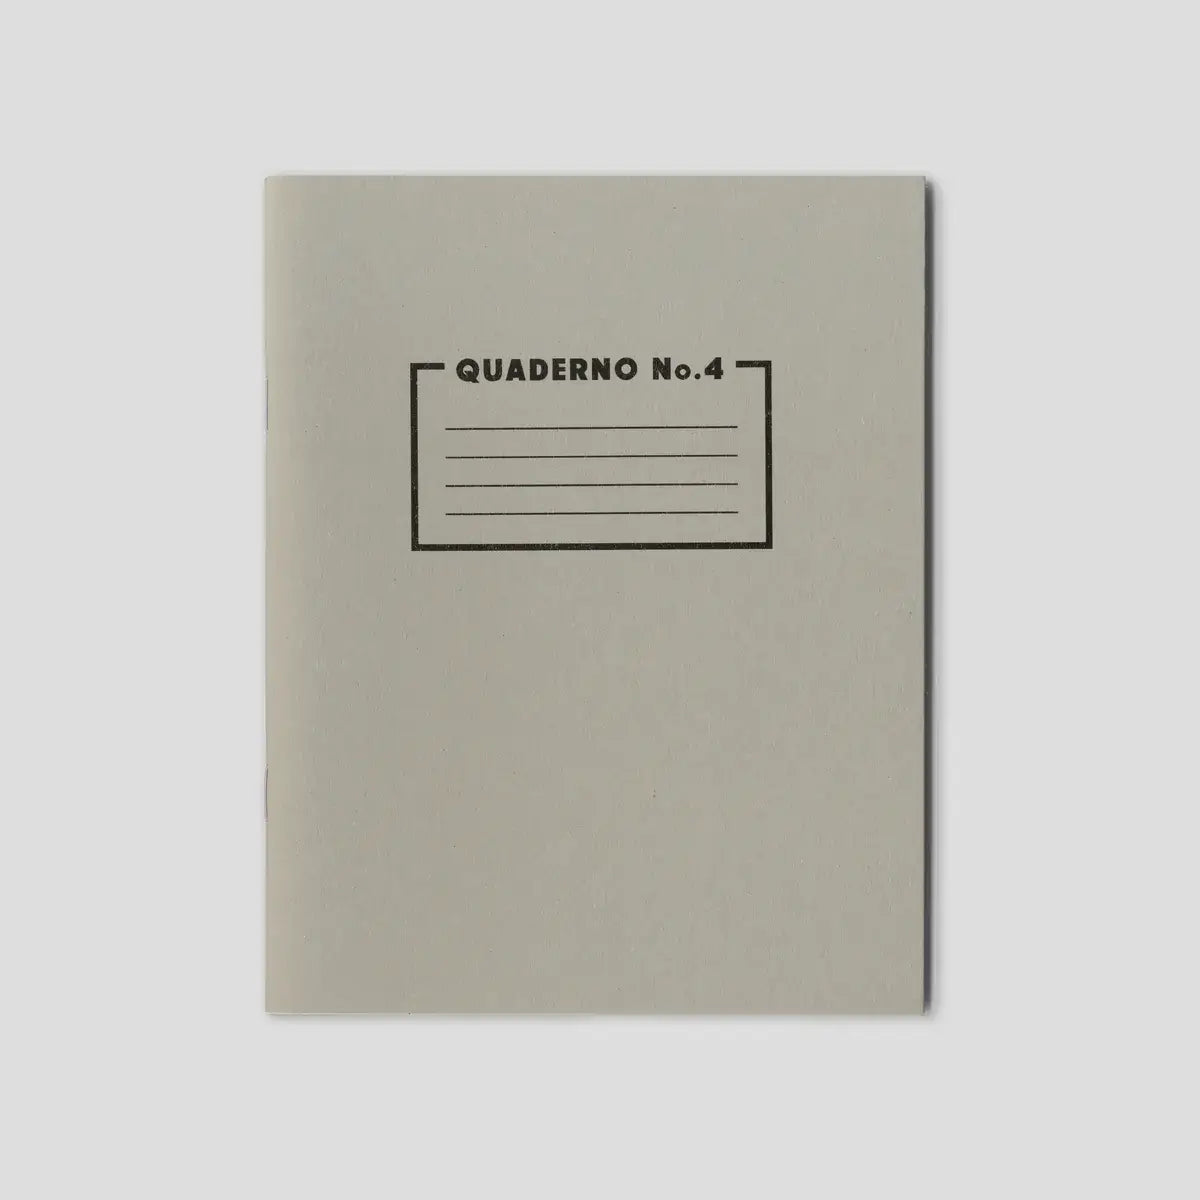 Quaderno No. 4 - Ruled Lines Notebook